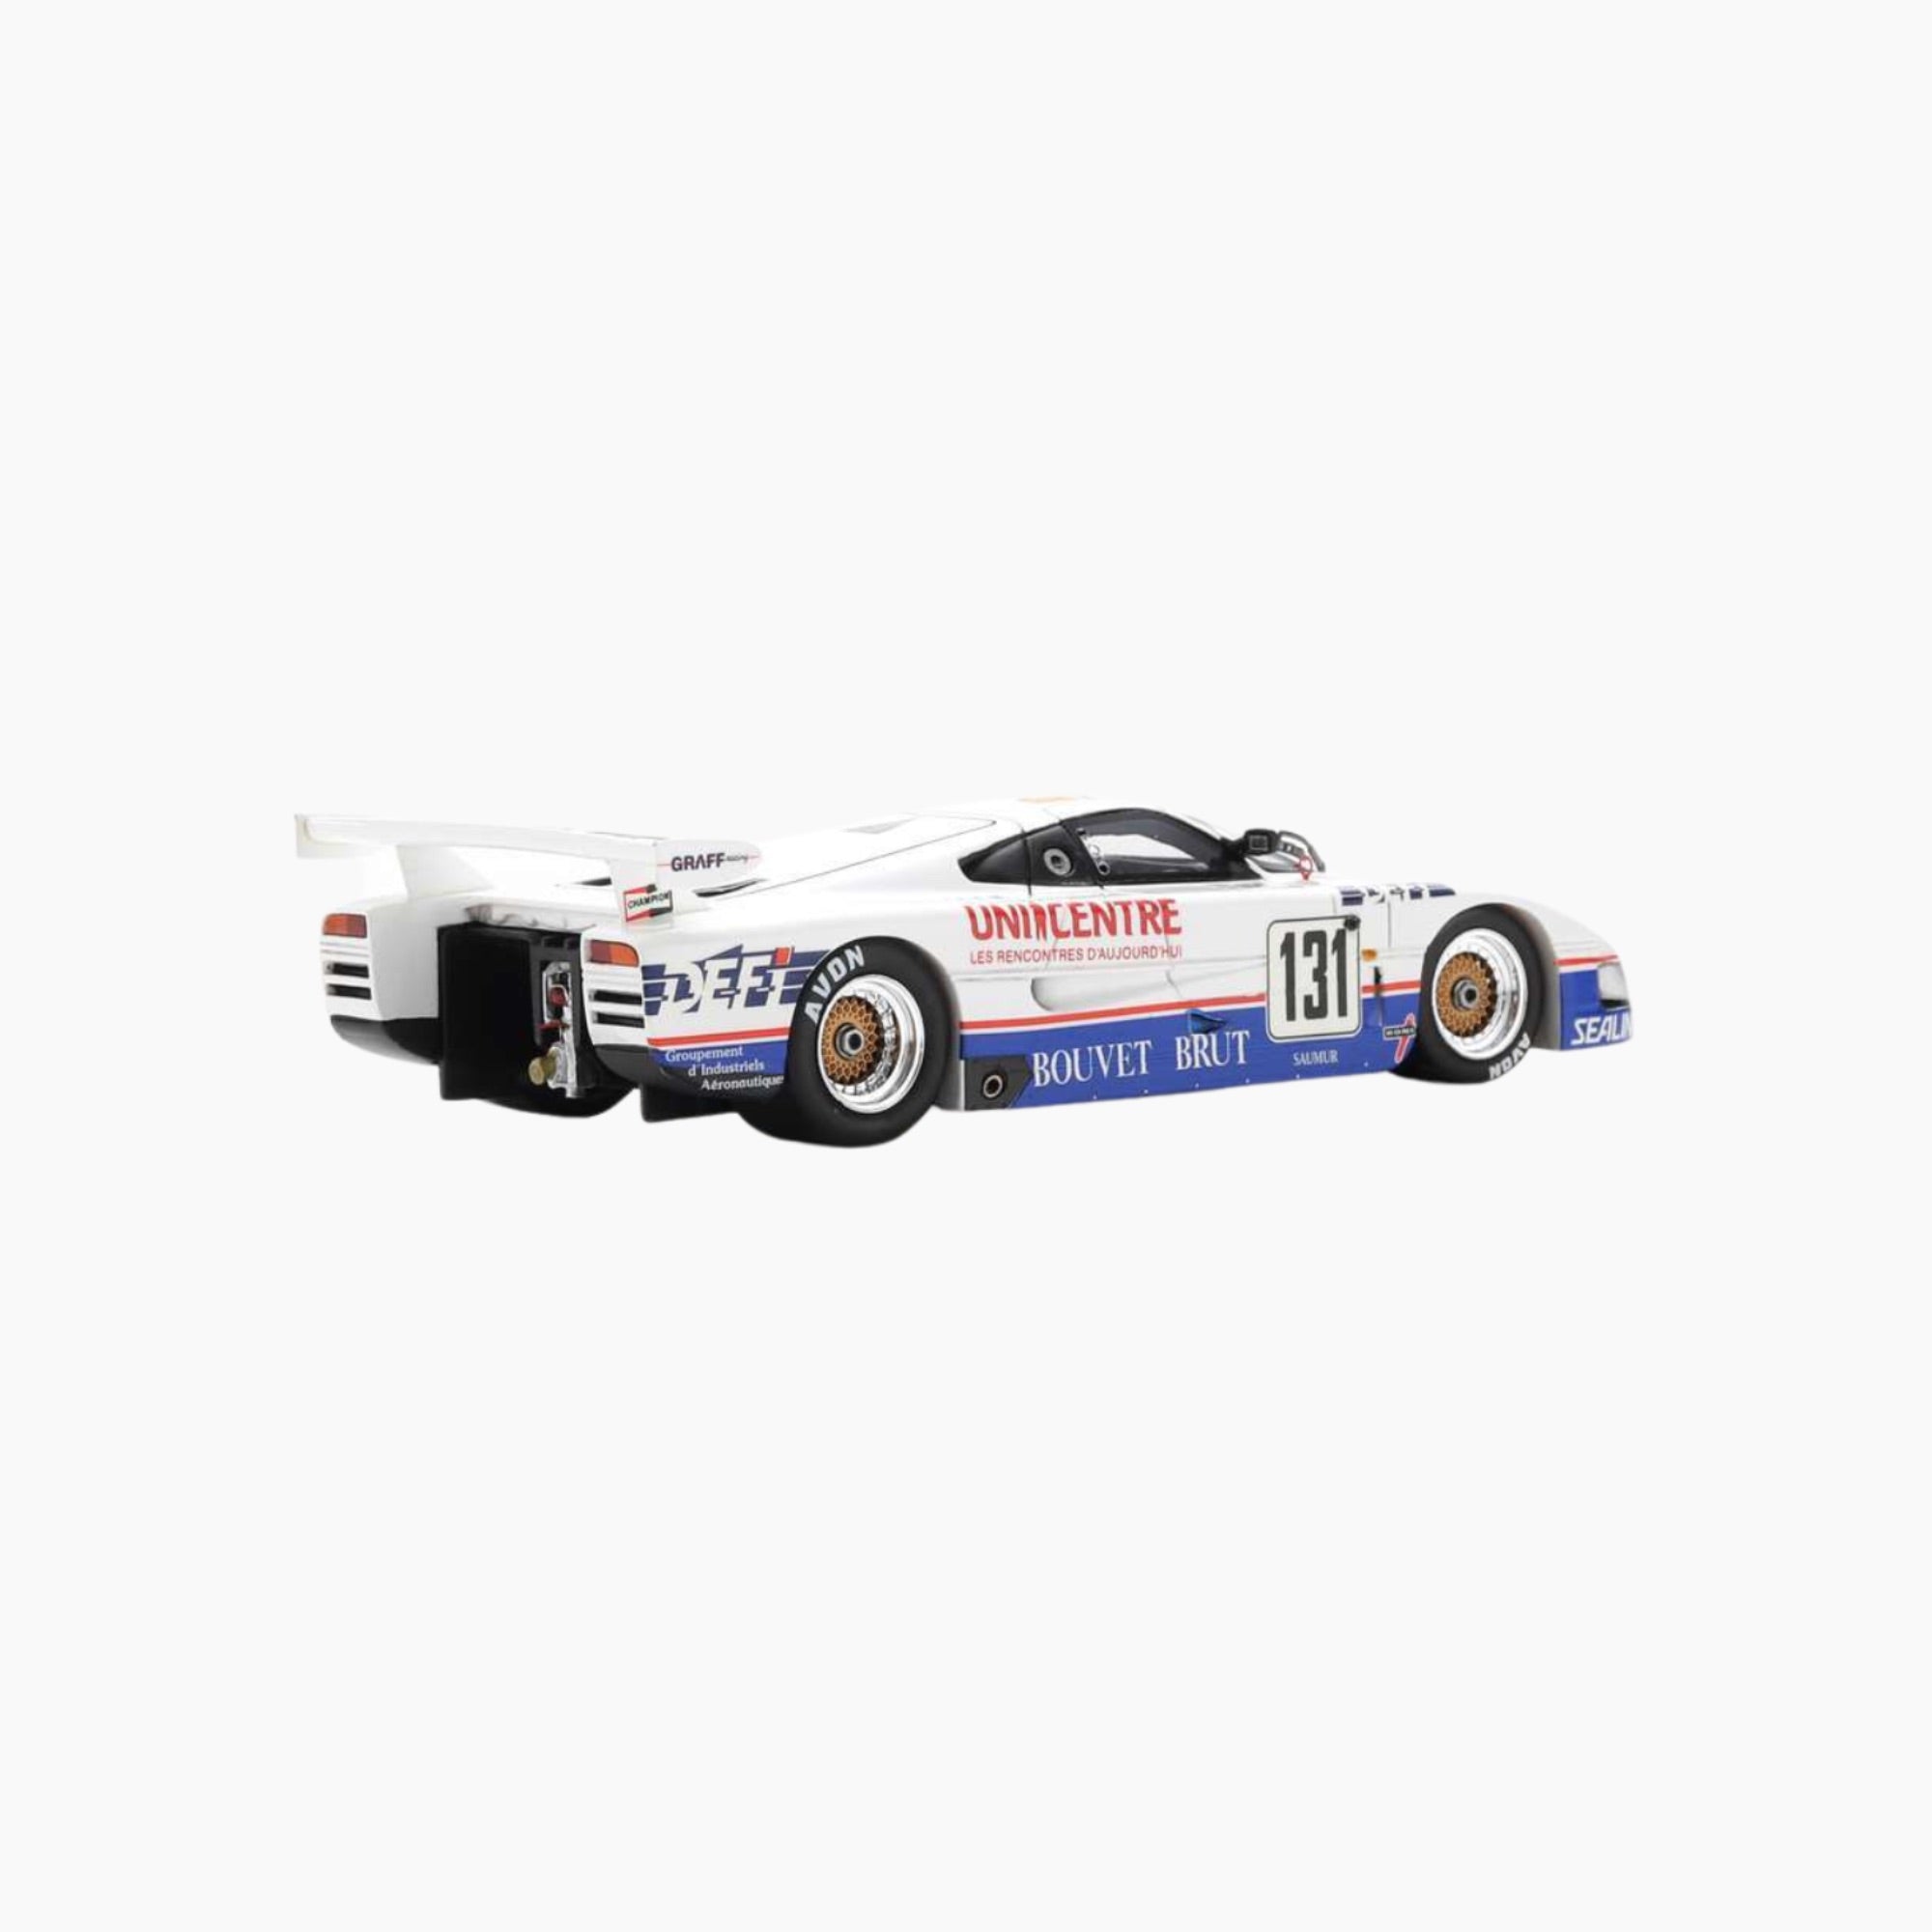 Spice SE 87C No131 Le Mans 1988 | 1:43 Scale Model-1:43 Scale Model-Spark Models-gpx-store